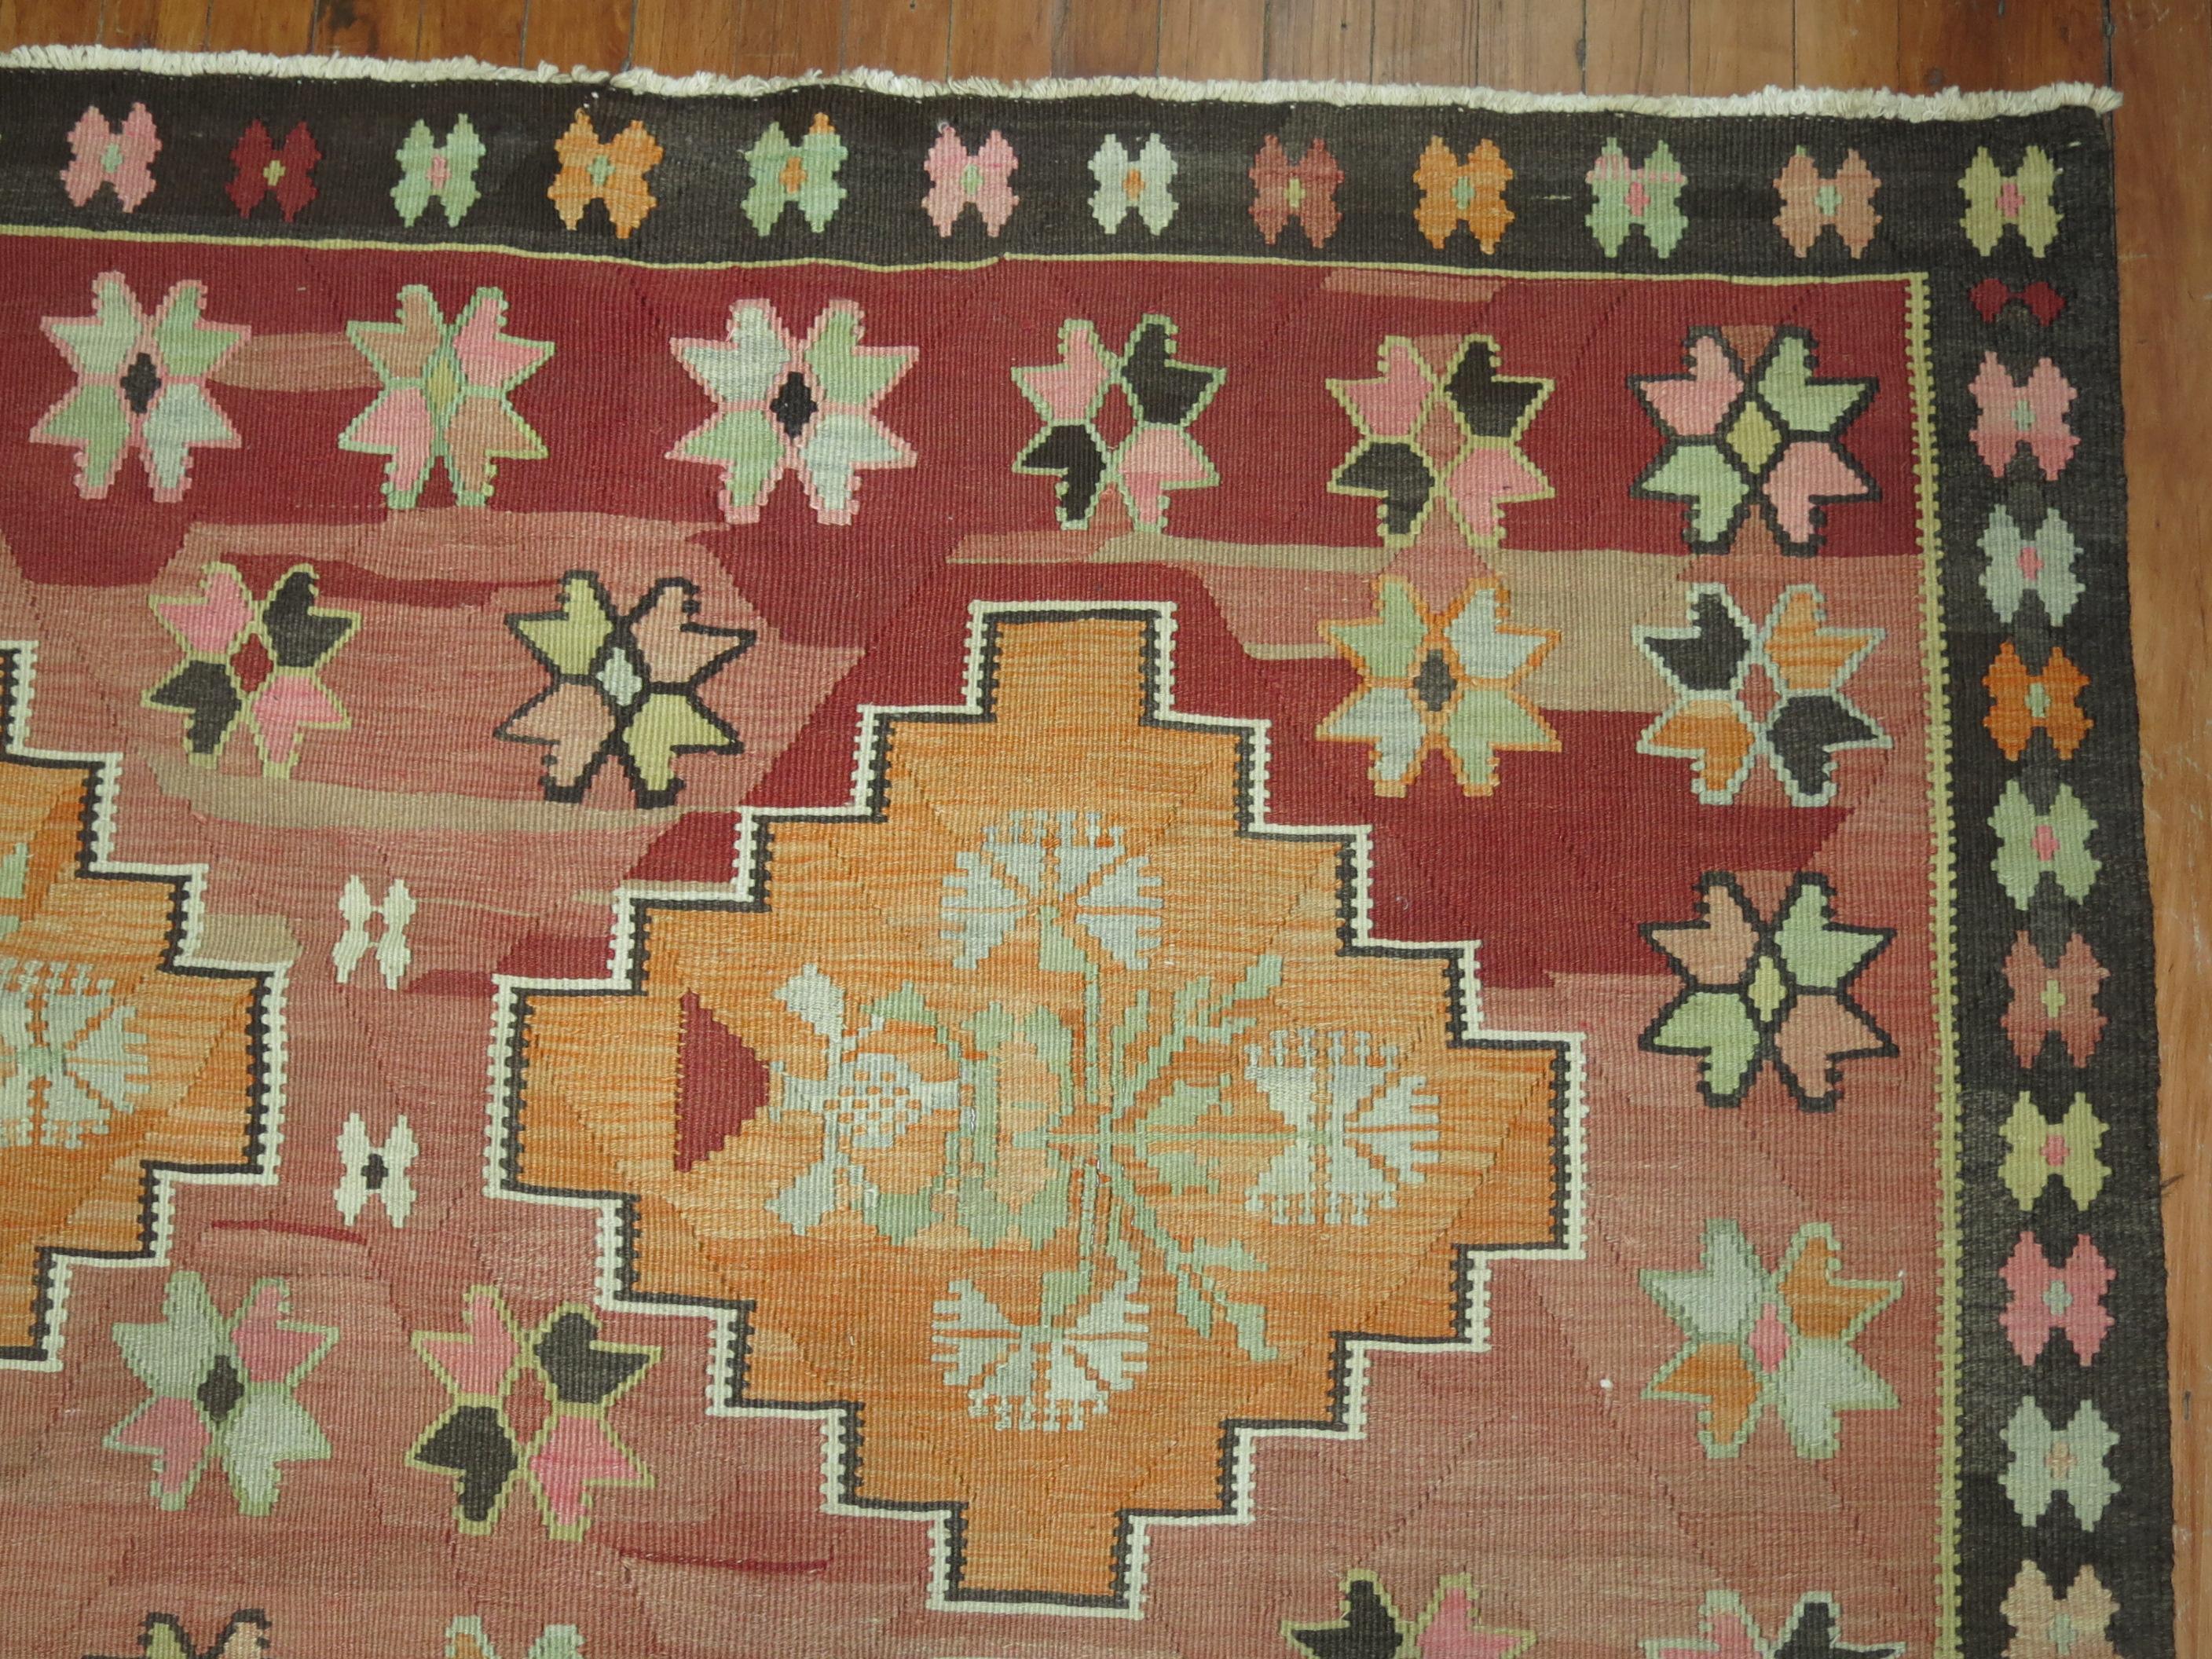 Geometric mid-20th century Turkish Kilim tribal flatweave rug

Measures: 5'7'' x 10'7'' circa mid-20th century.